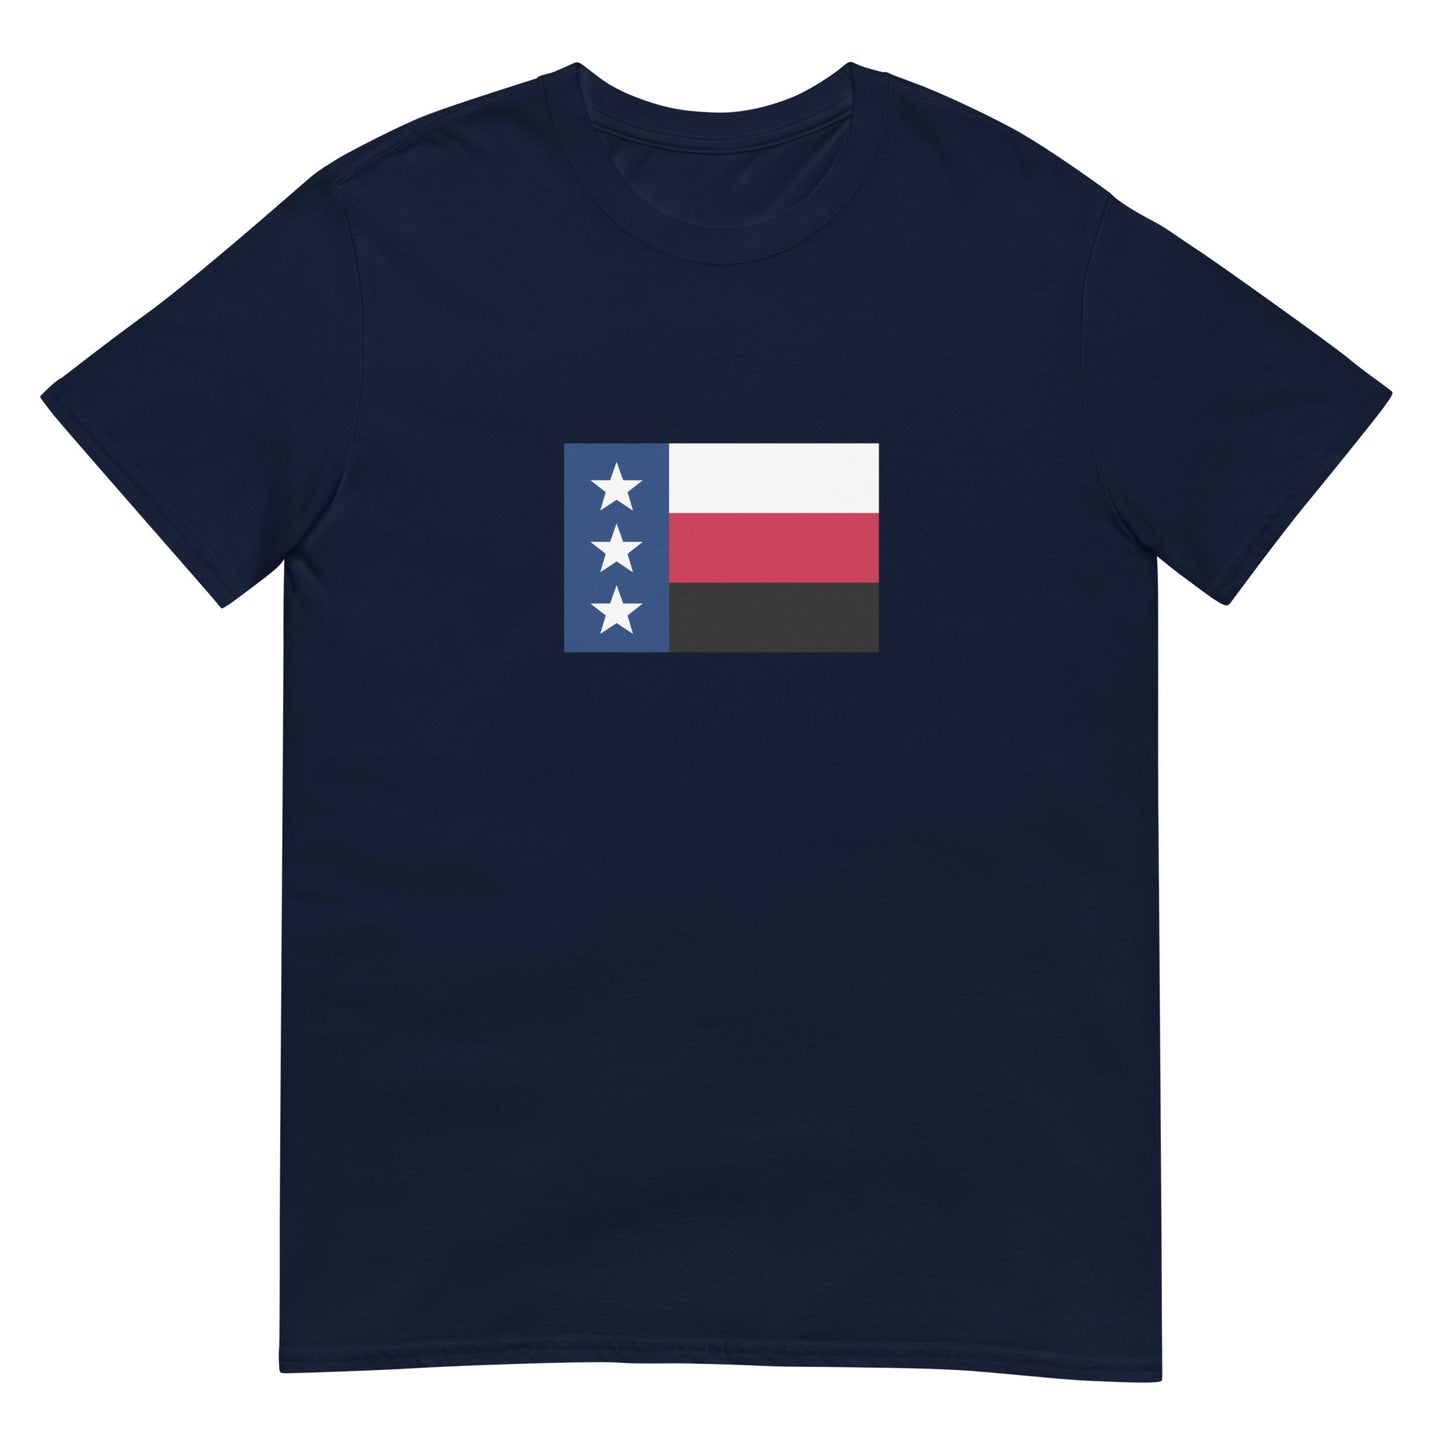 Mexico - Republic of Rio Grande (1840-1840) | Mexican Flag Interactive History T-Shirt